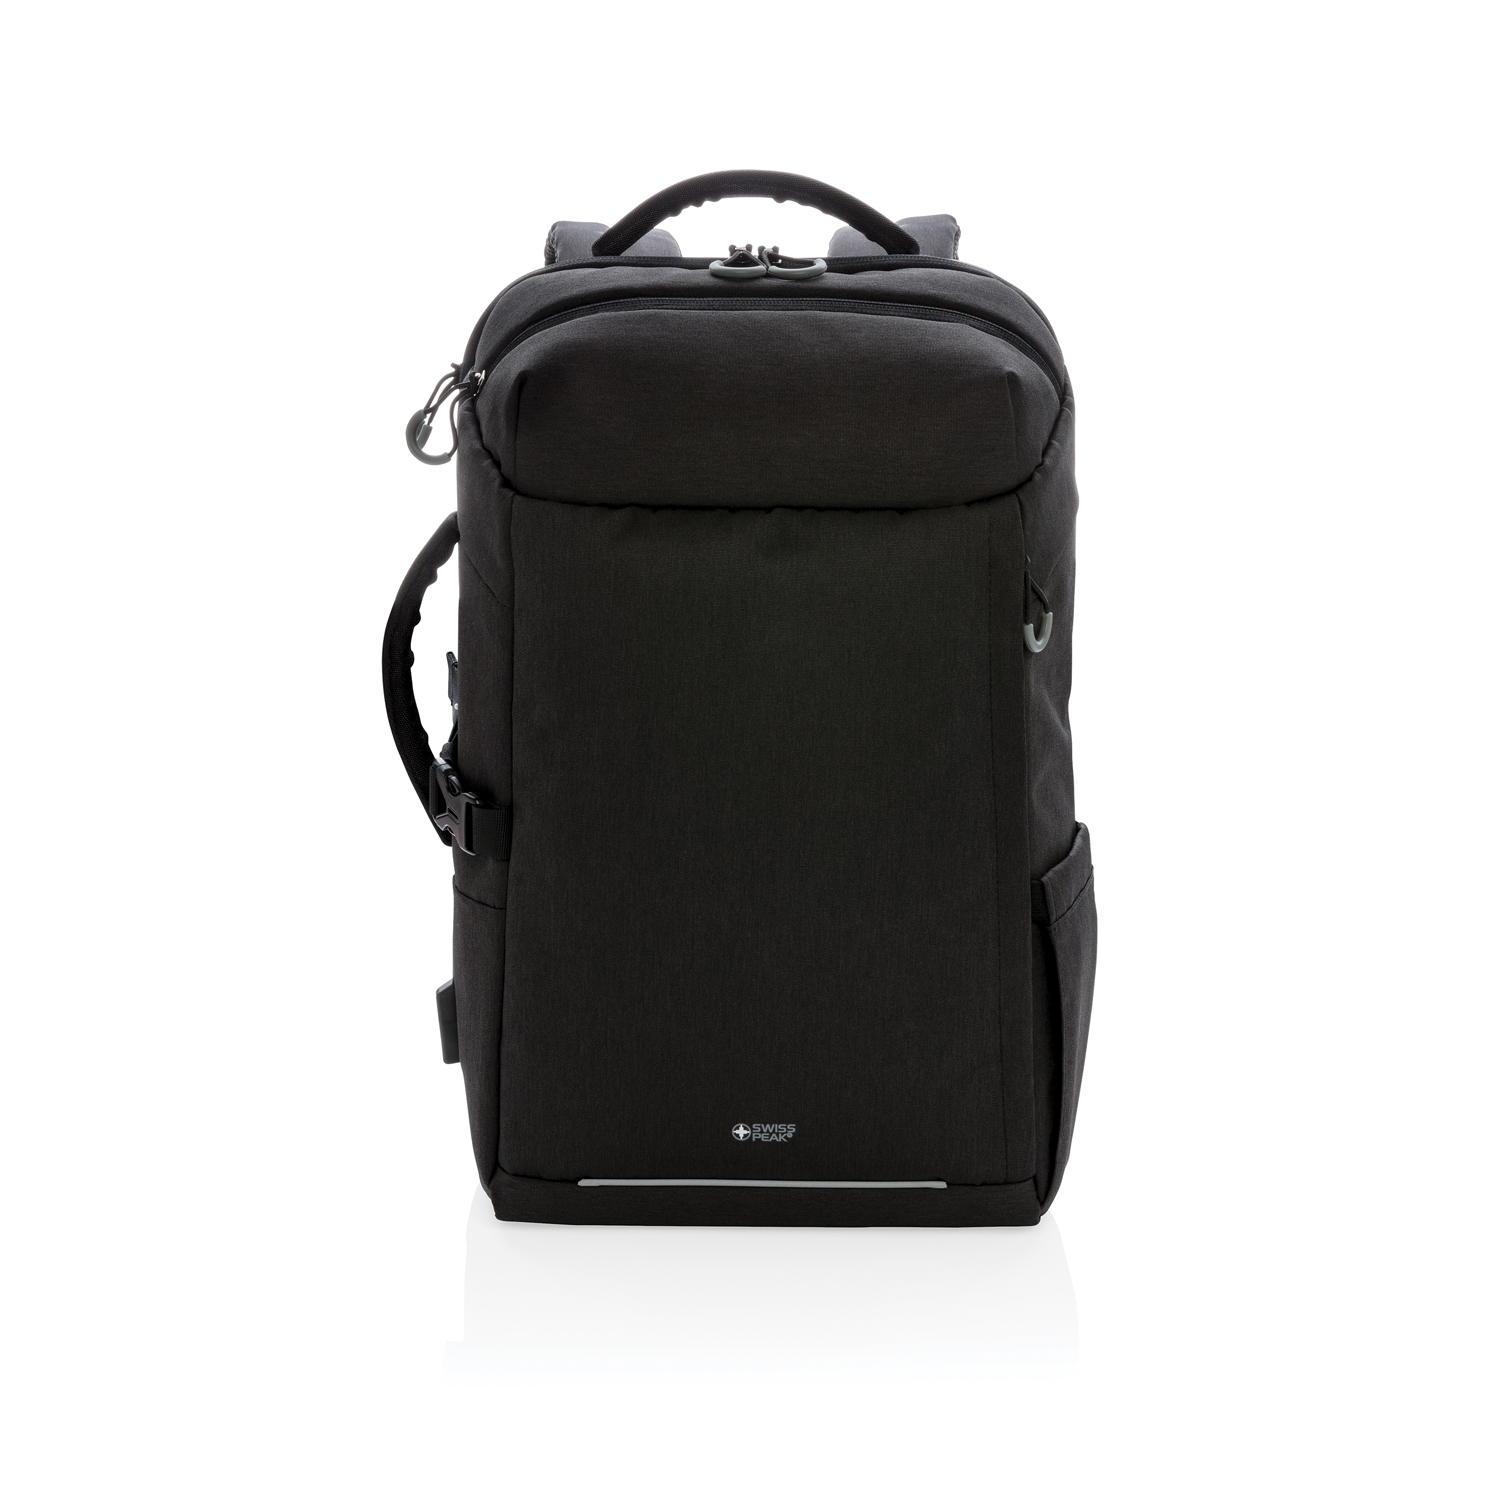 Рюкзак для путешествий Swiss Peak XXL Weekend с RFID защитой и разъемом USB